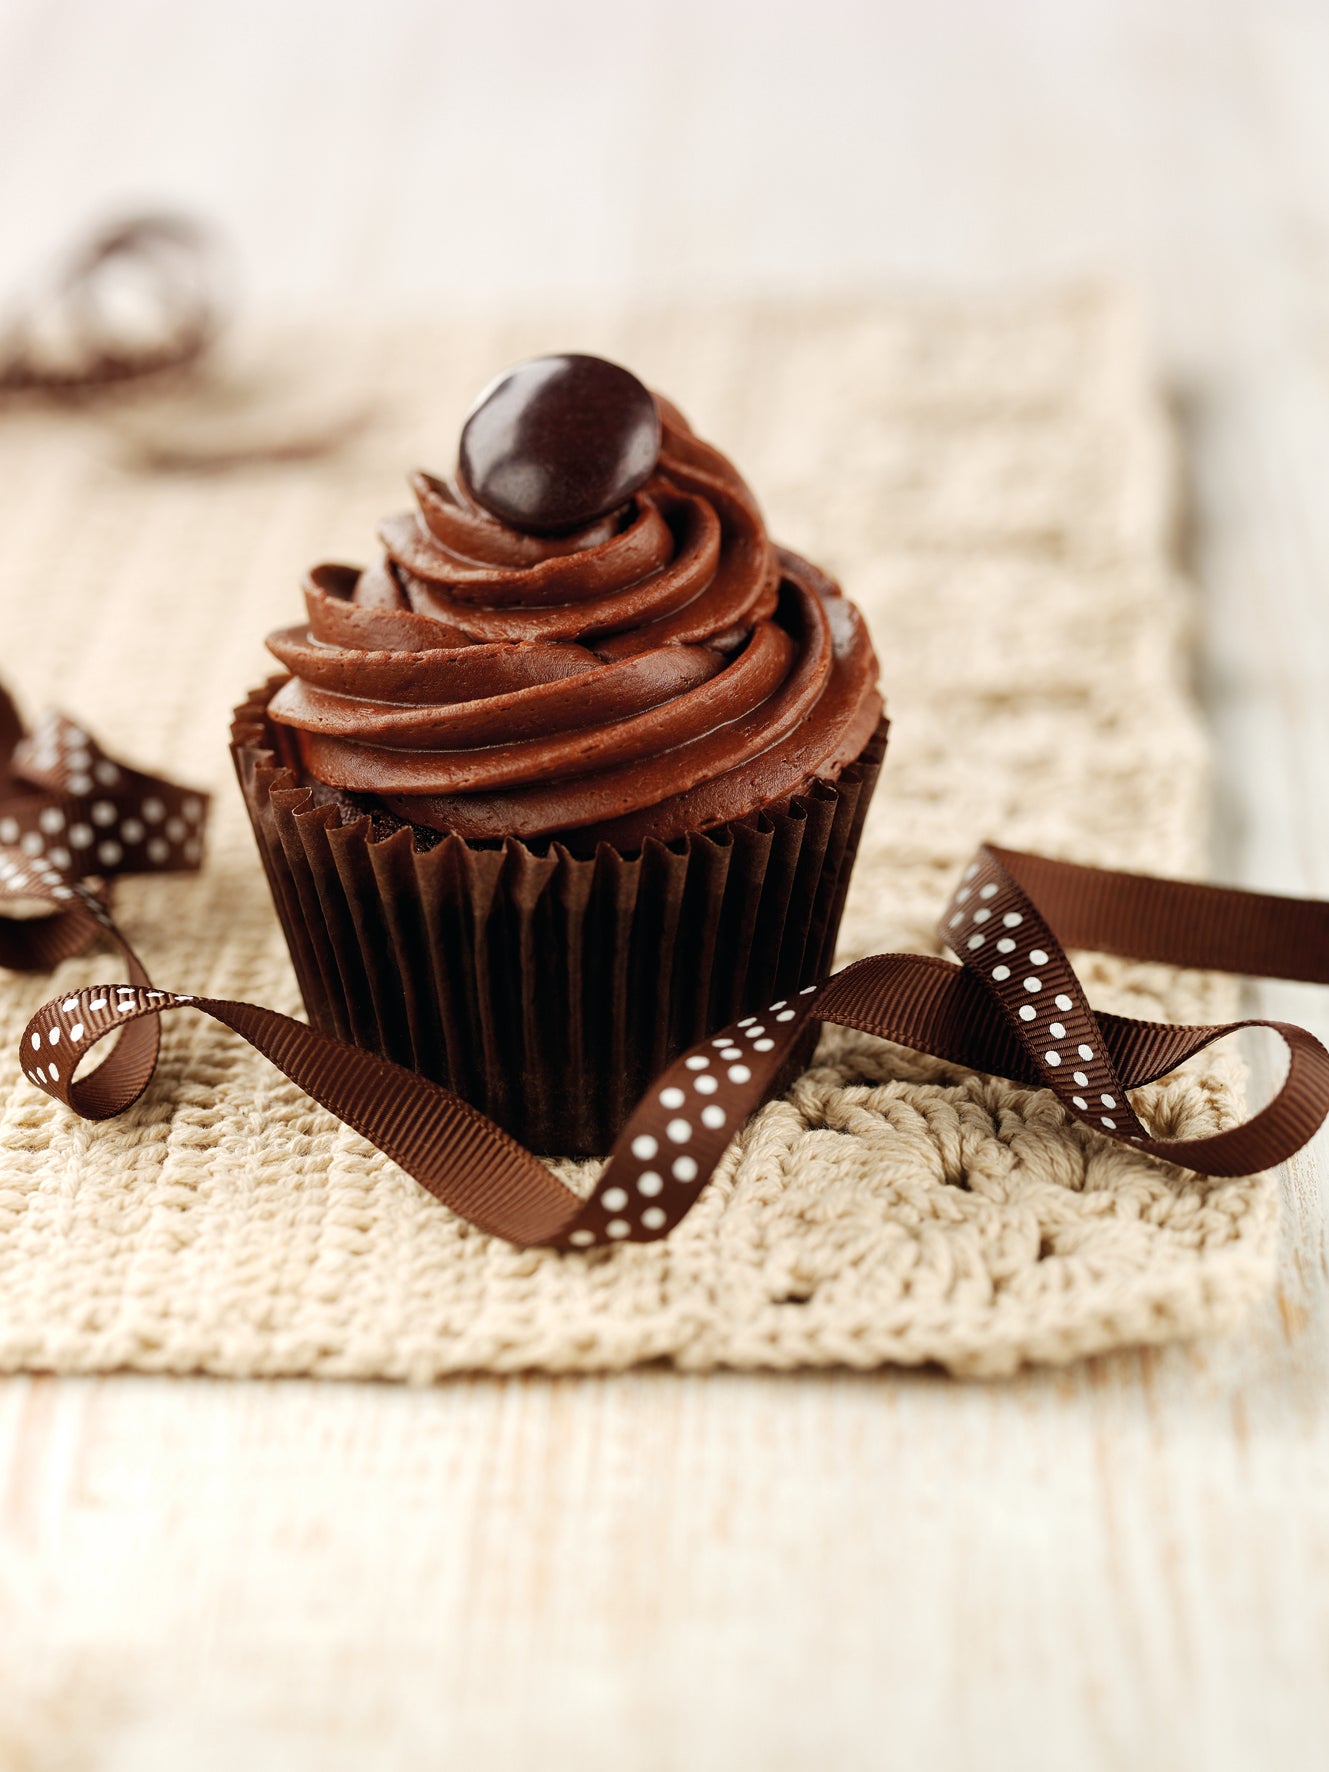 Nielsen-Massey-Chocolate-Cupcake.jpg